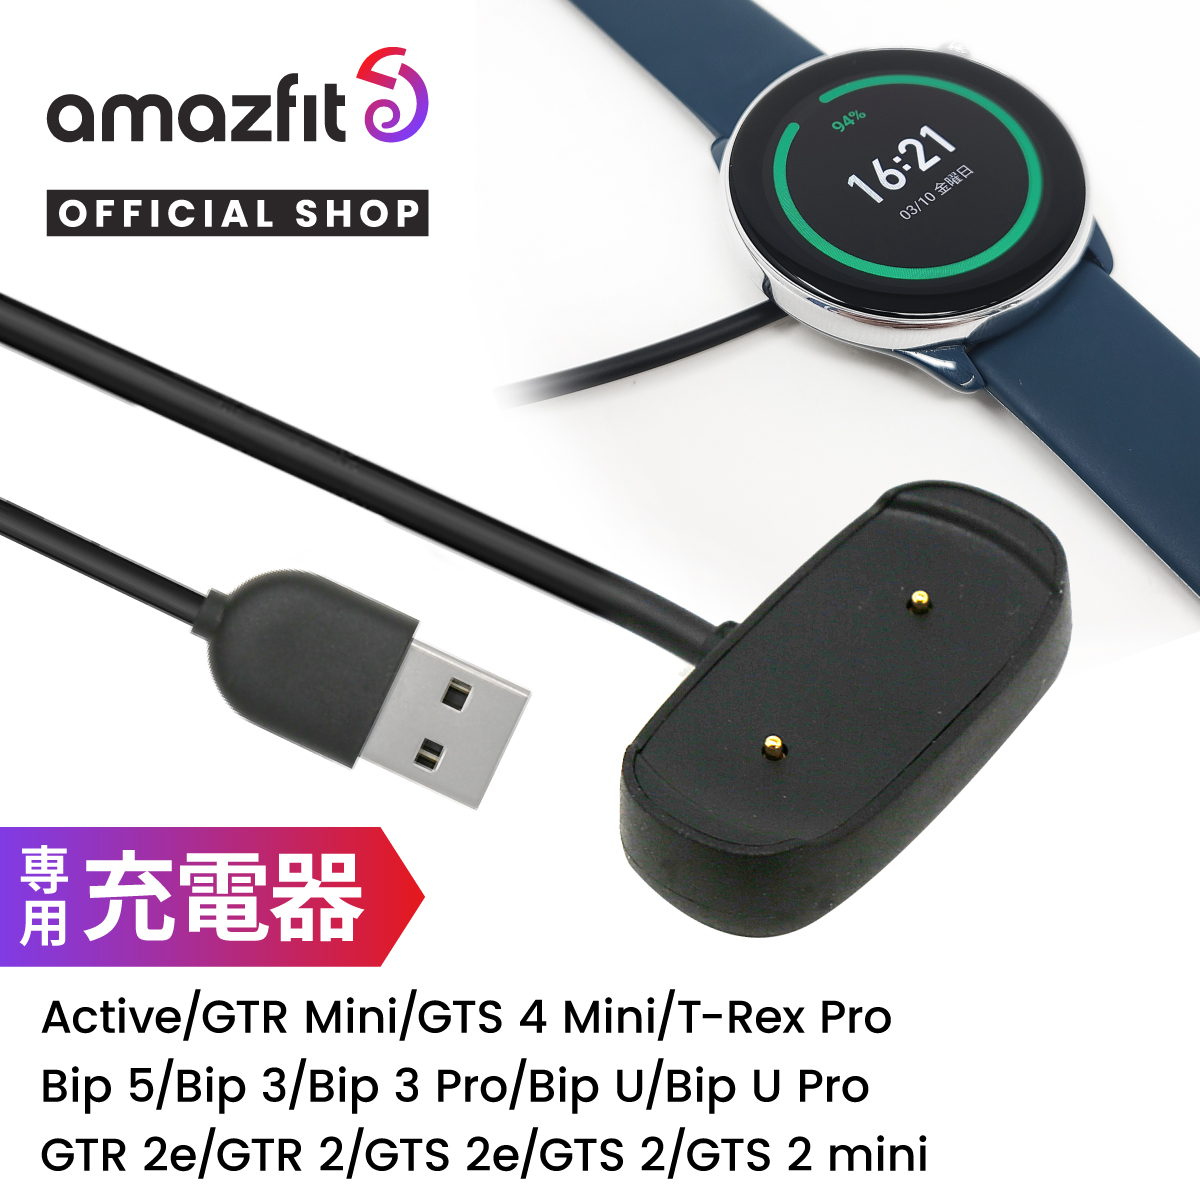 Amazfit スマートウォッチ 充電器 マグネット式 USB充電 GTS4Mini GTS2mini Bip3 Bip3Pro BipU BipUPro T-RexPro GTR2 GTR2e GTS2 GTS2e 予備 磁気脱着 純正品